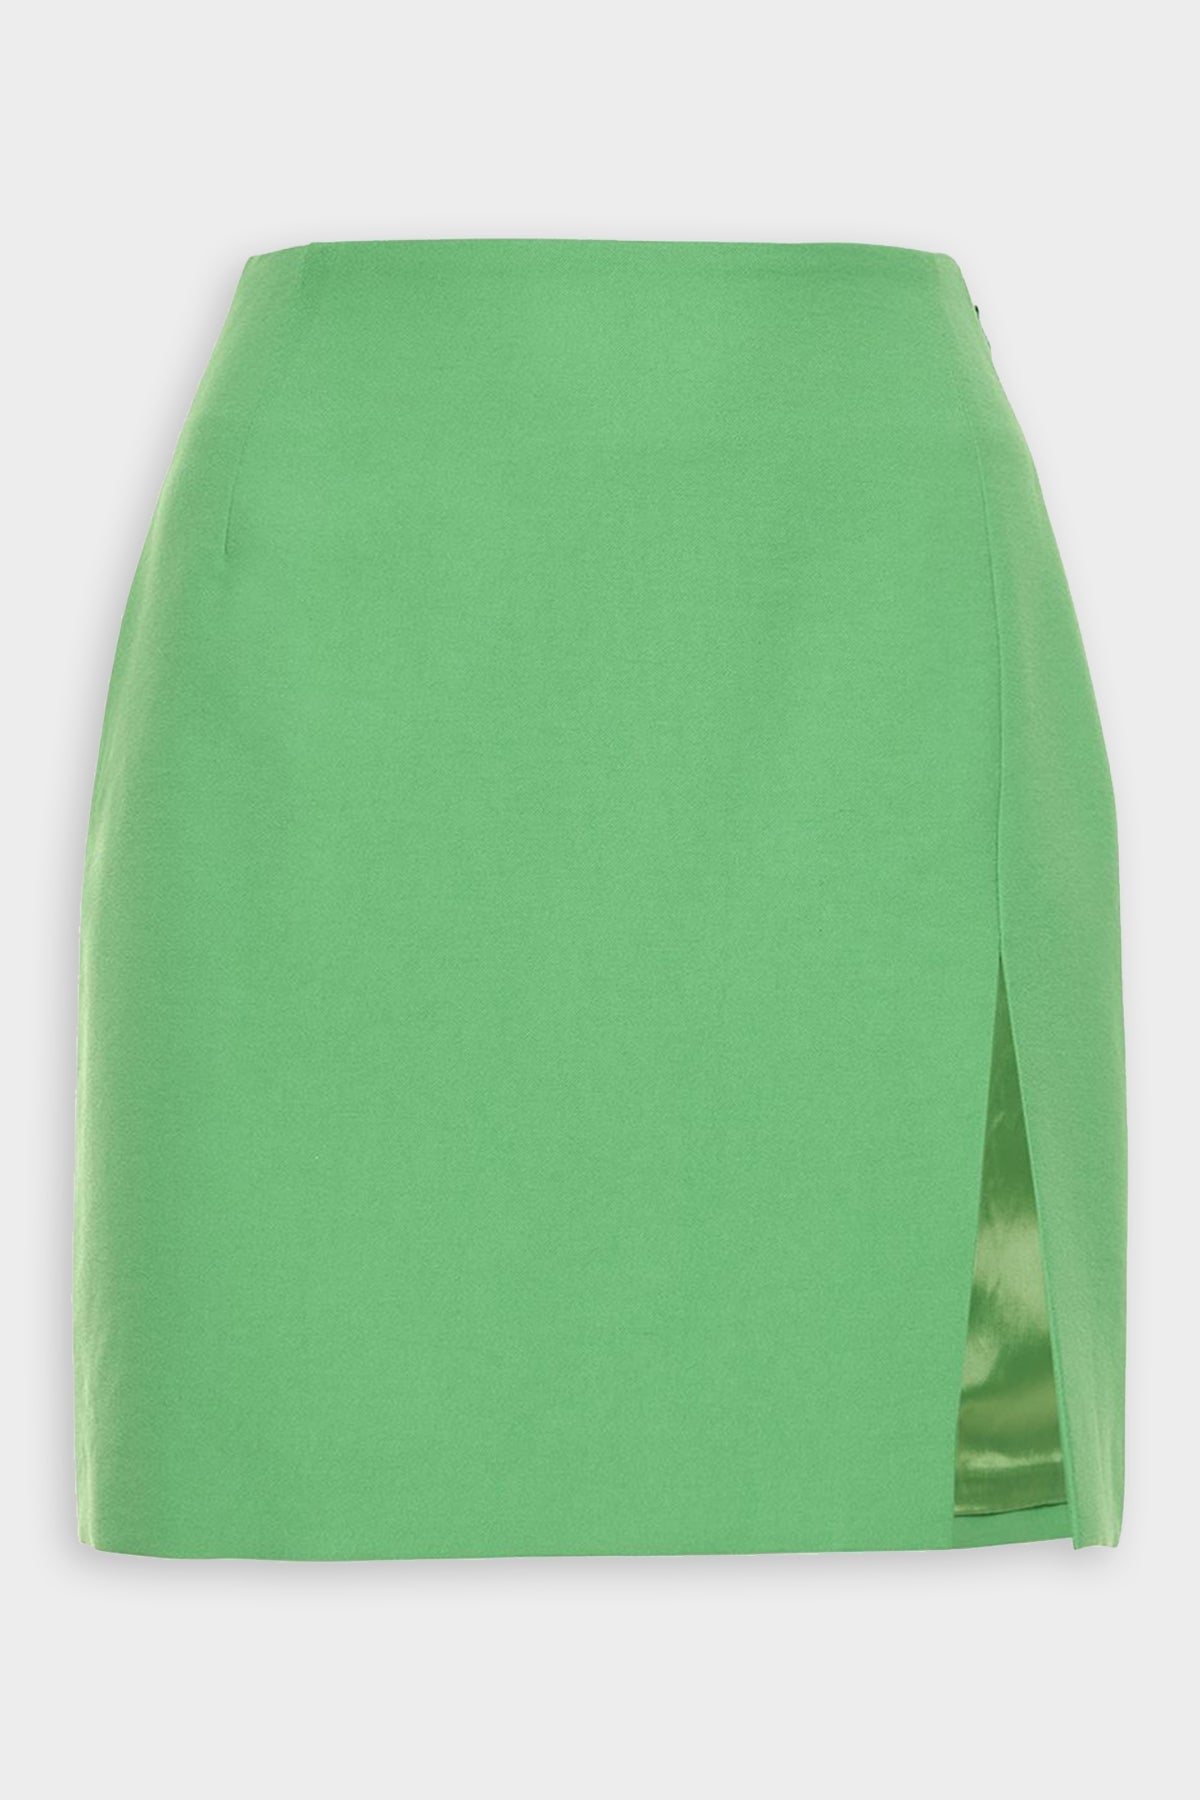 Giona Mini Skirt in Green - shop-olivia.com